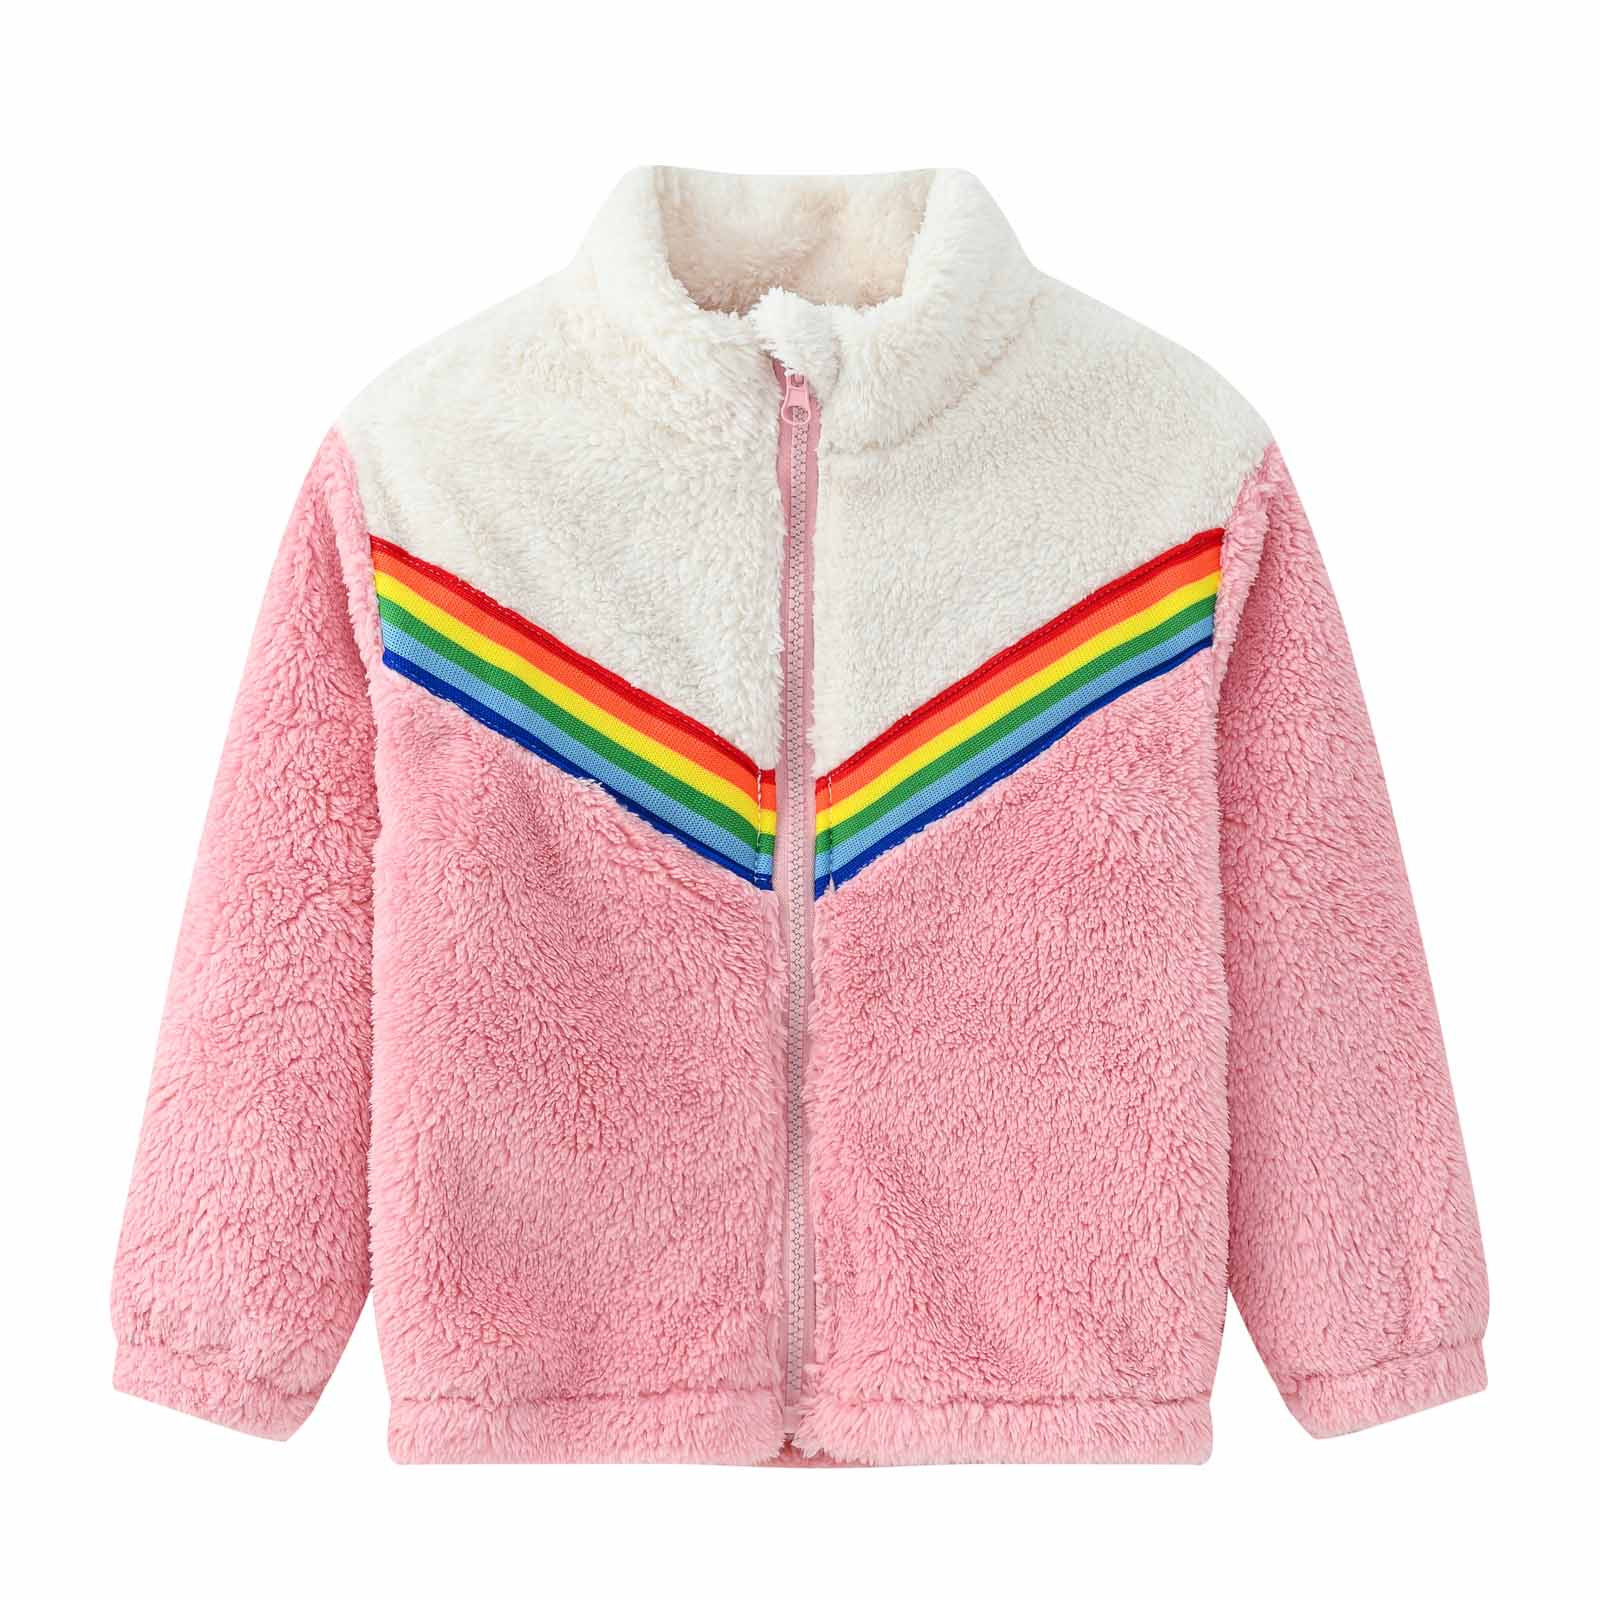 YYDGH Girls Zipper Jacket Fuzzy Sweatshirt Long Sleeve Casual Cozy Fleece Sherpa Outwear Coat Full-Zip Rainbow Jackets(Pink,7-8 Years) - image 1 of 8